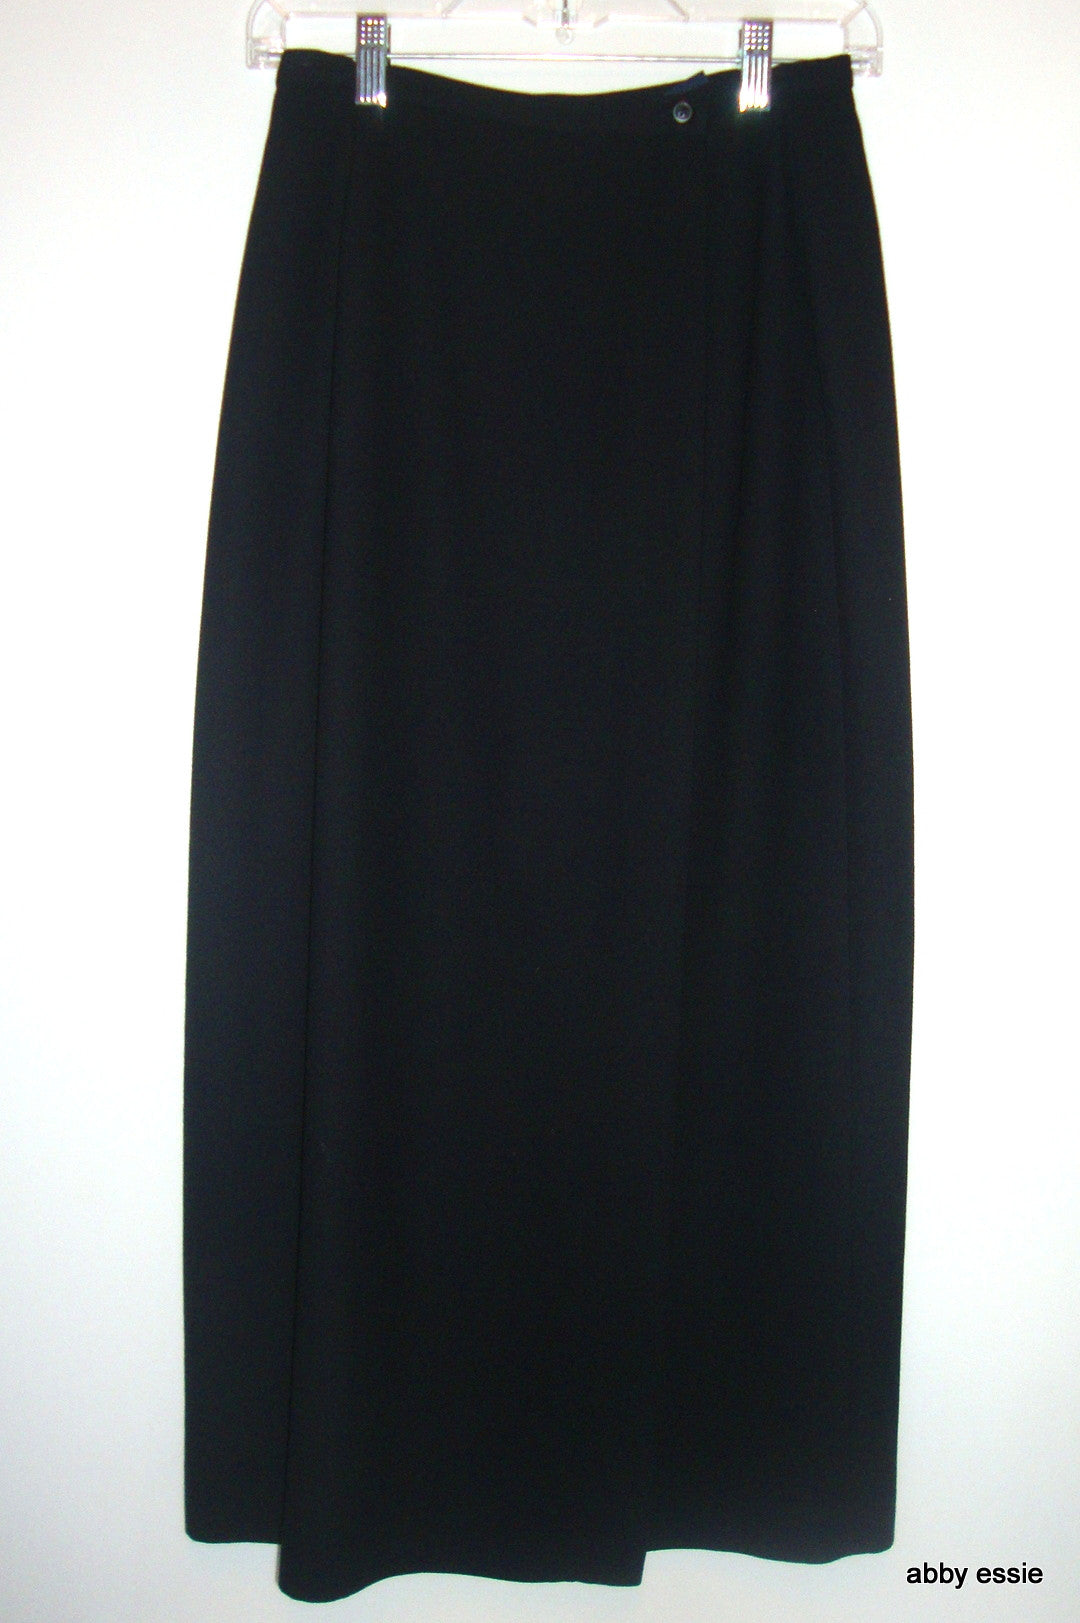 Gap - Long Black Wrap Skirt Sz 4 Small Abby Essie